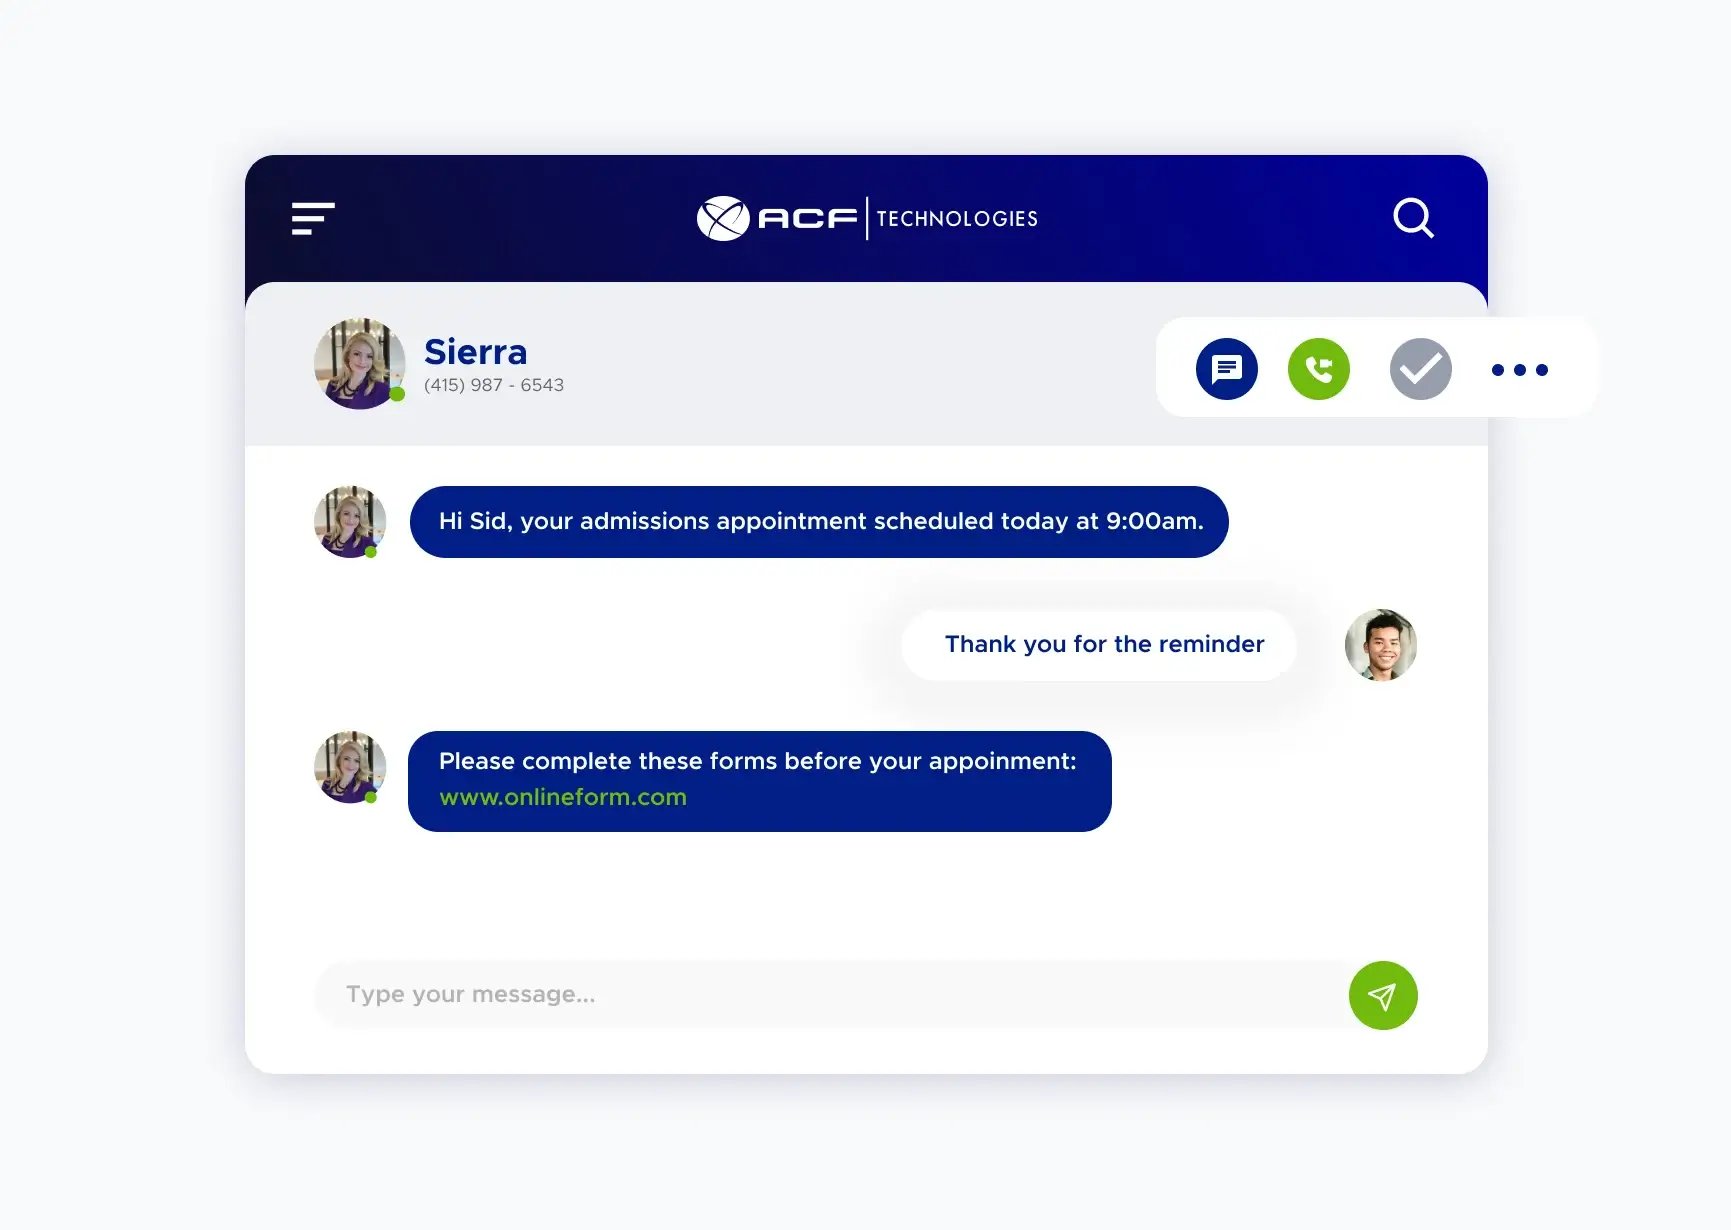 Simulation of a conversation using the ACF Technologies platform